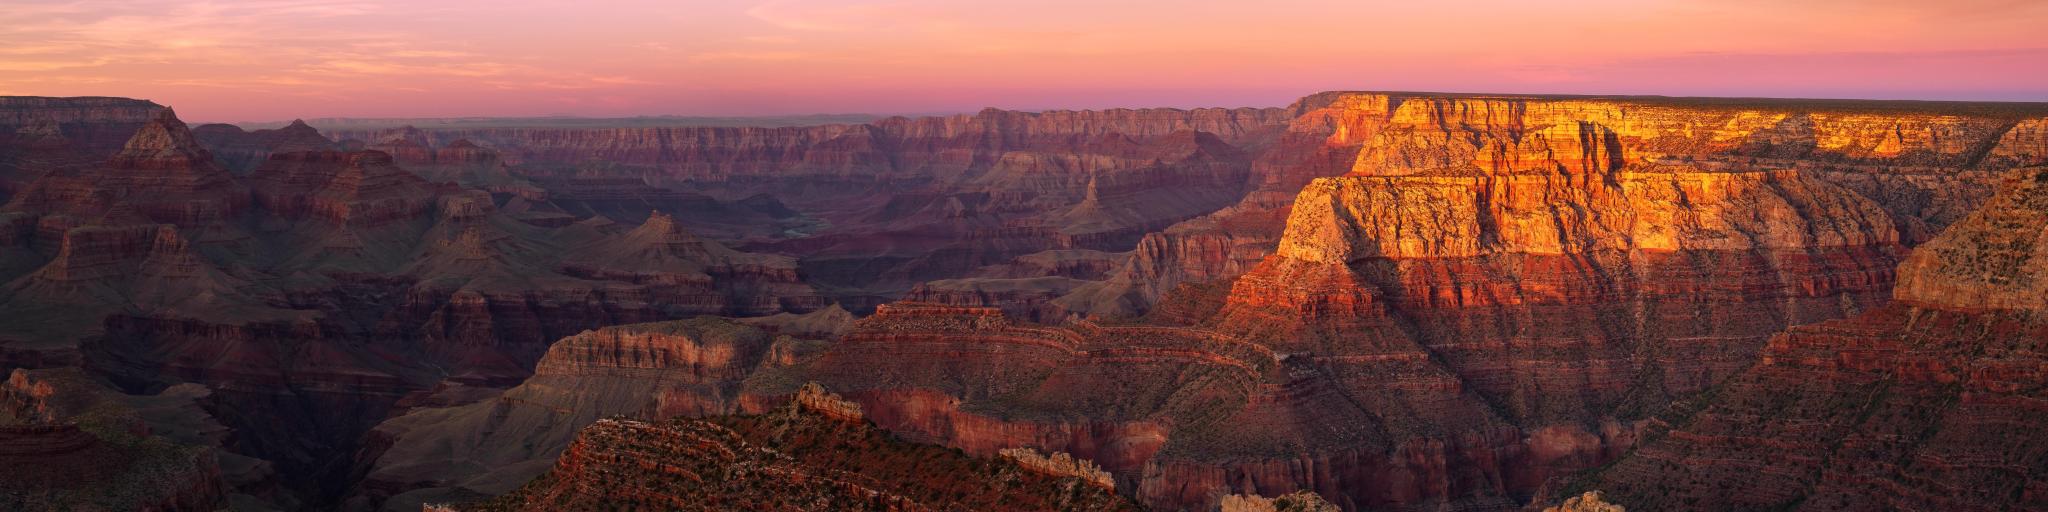 Grand Canyon National Park, Arizona, USA  with a grand sunset over the Canyon.